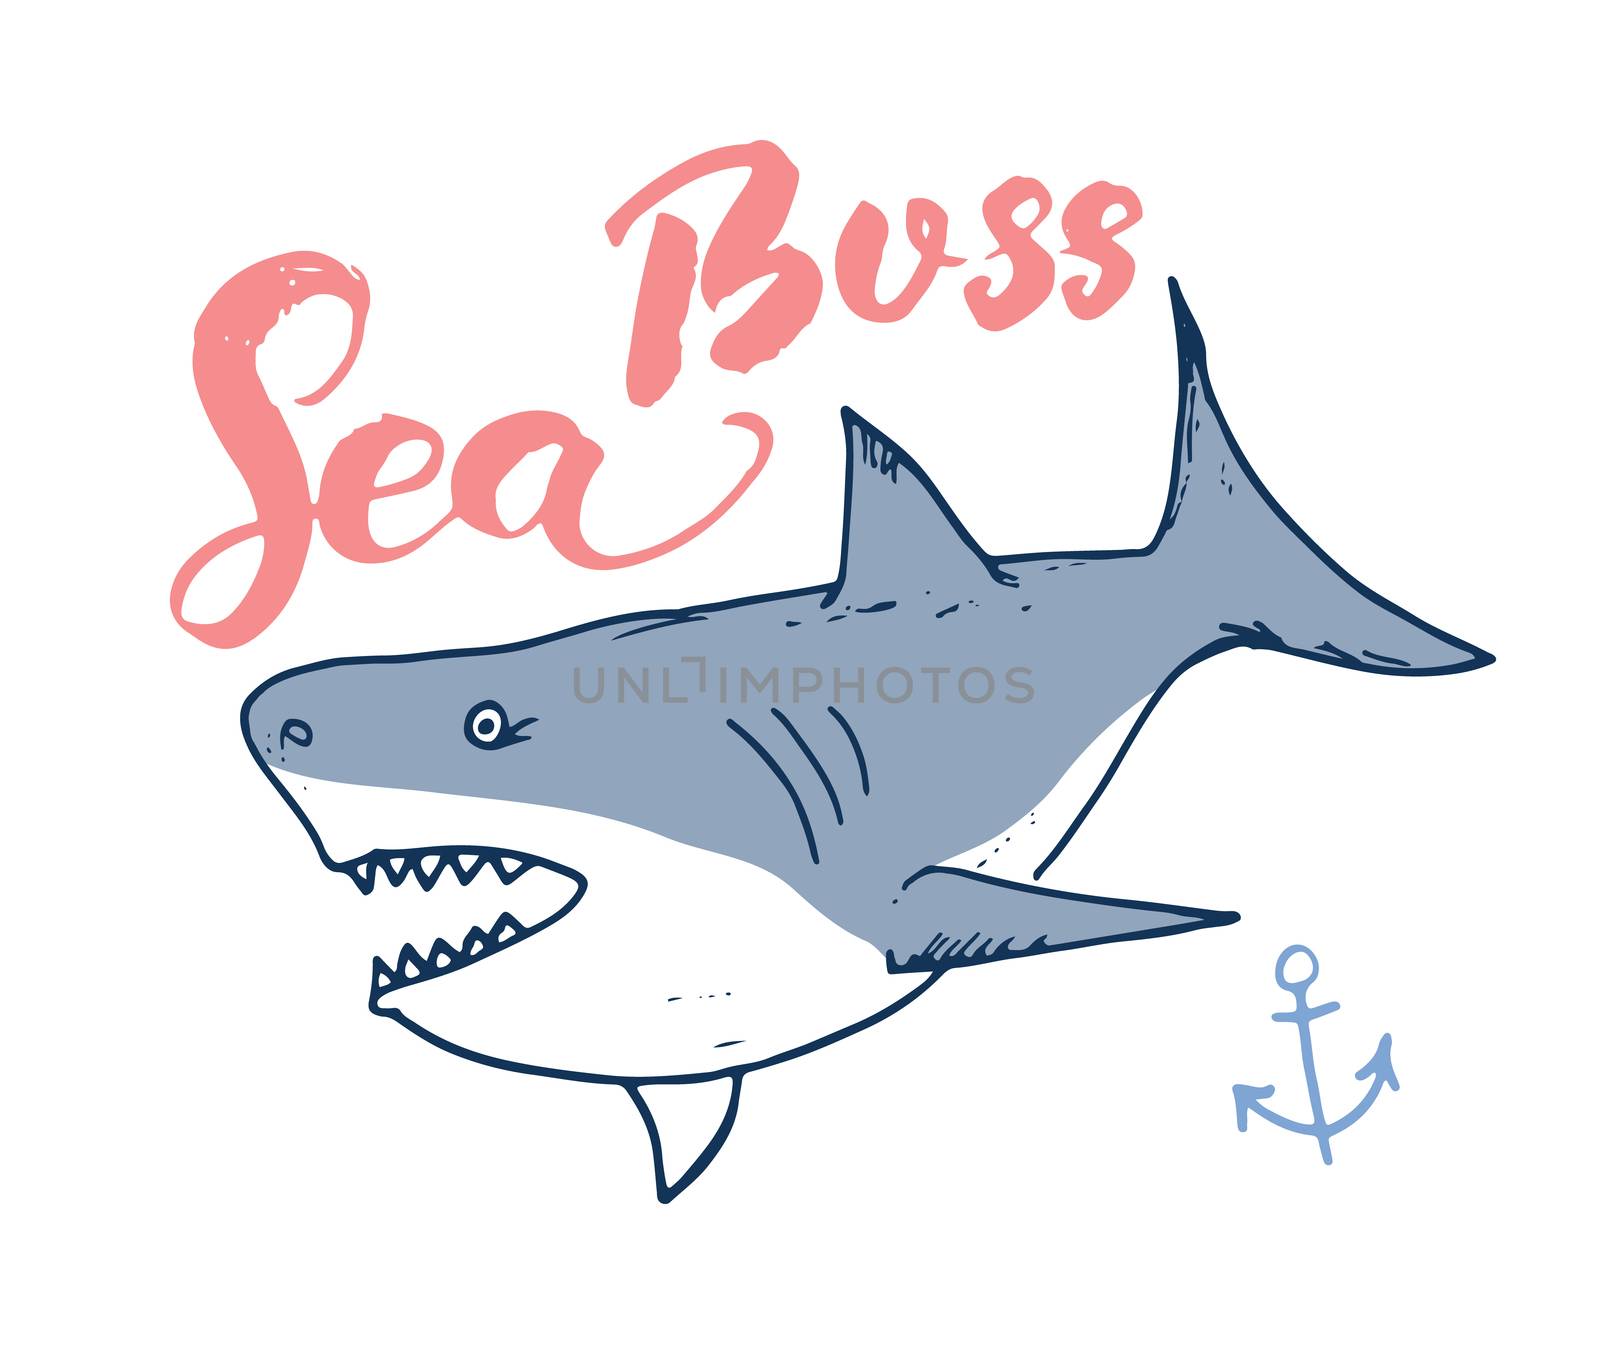 Cute Shark hand drawn sketch, T-shirt print design vector illustration.